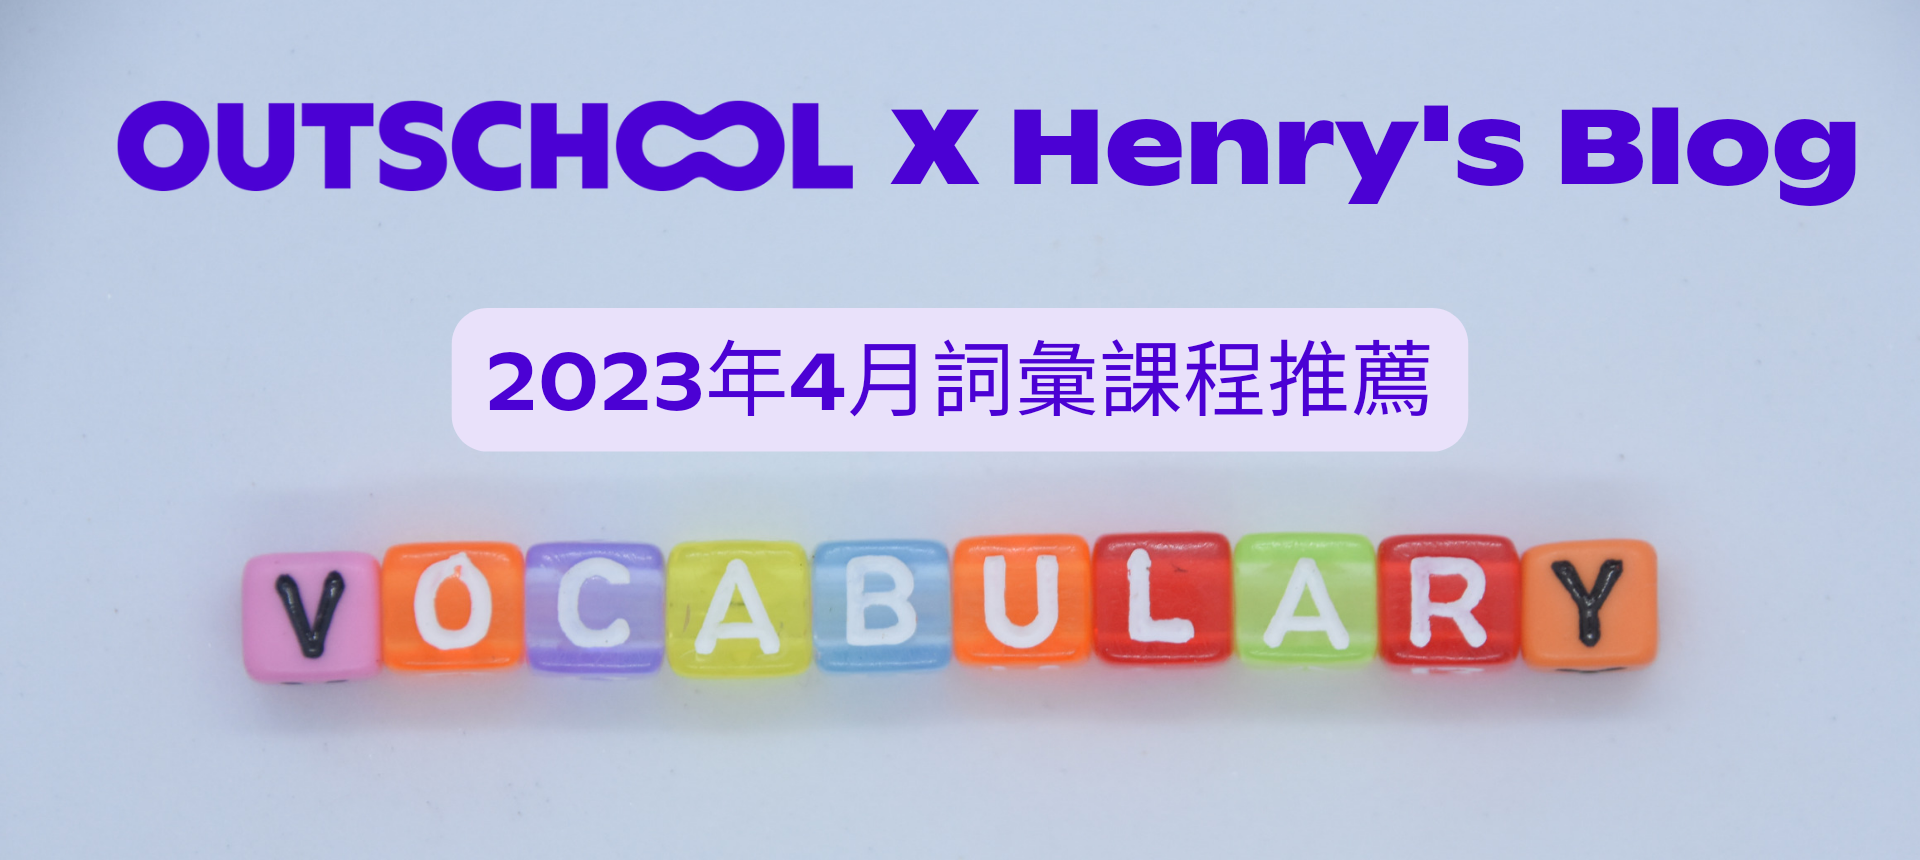 Outschool X Henry's Blog 2023年4月主題課單 Vocabulary詞彙篇